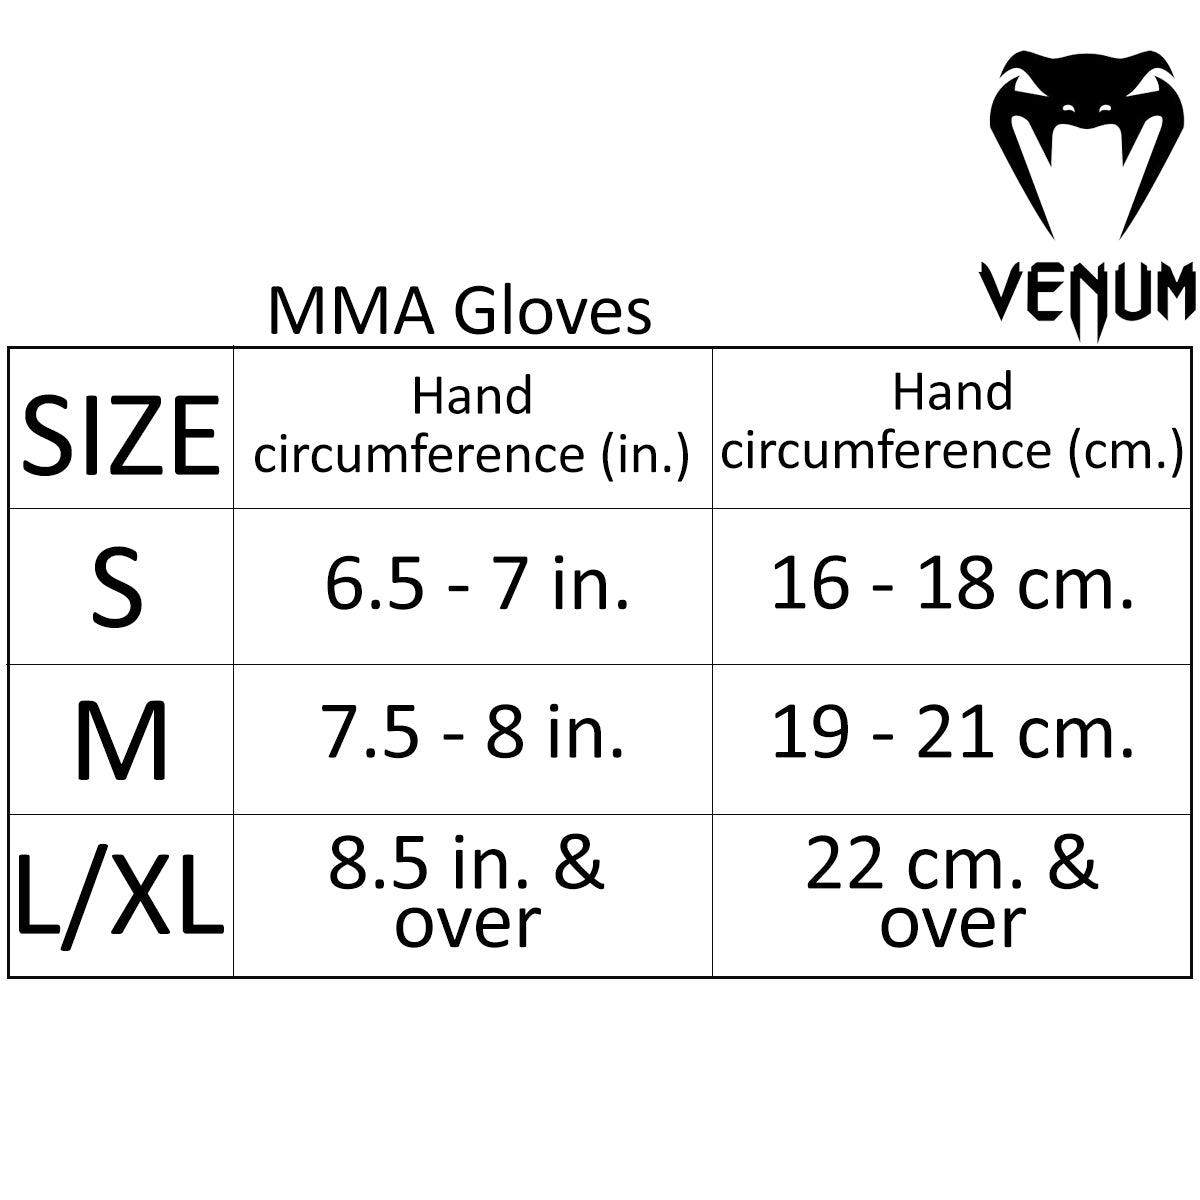 Venum Hyperlift Training Weight Lifting Gloves Venum